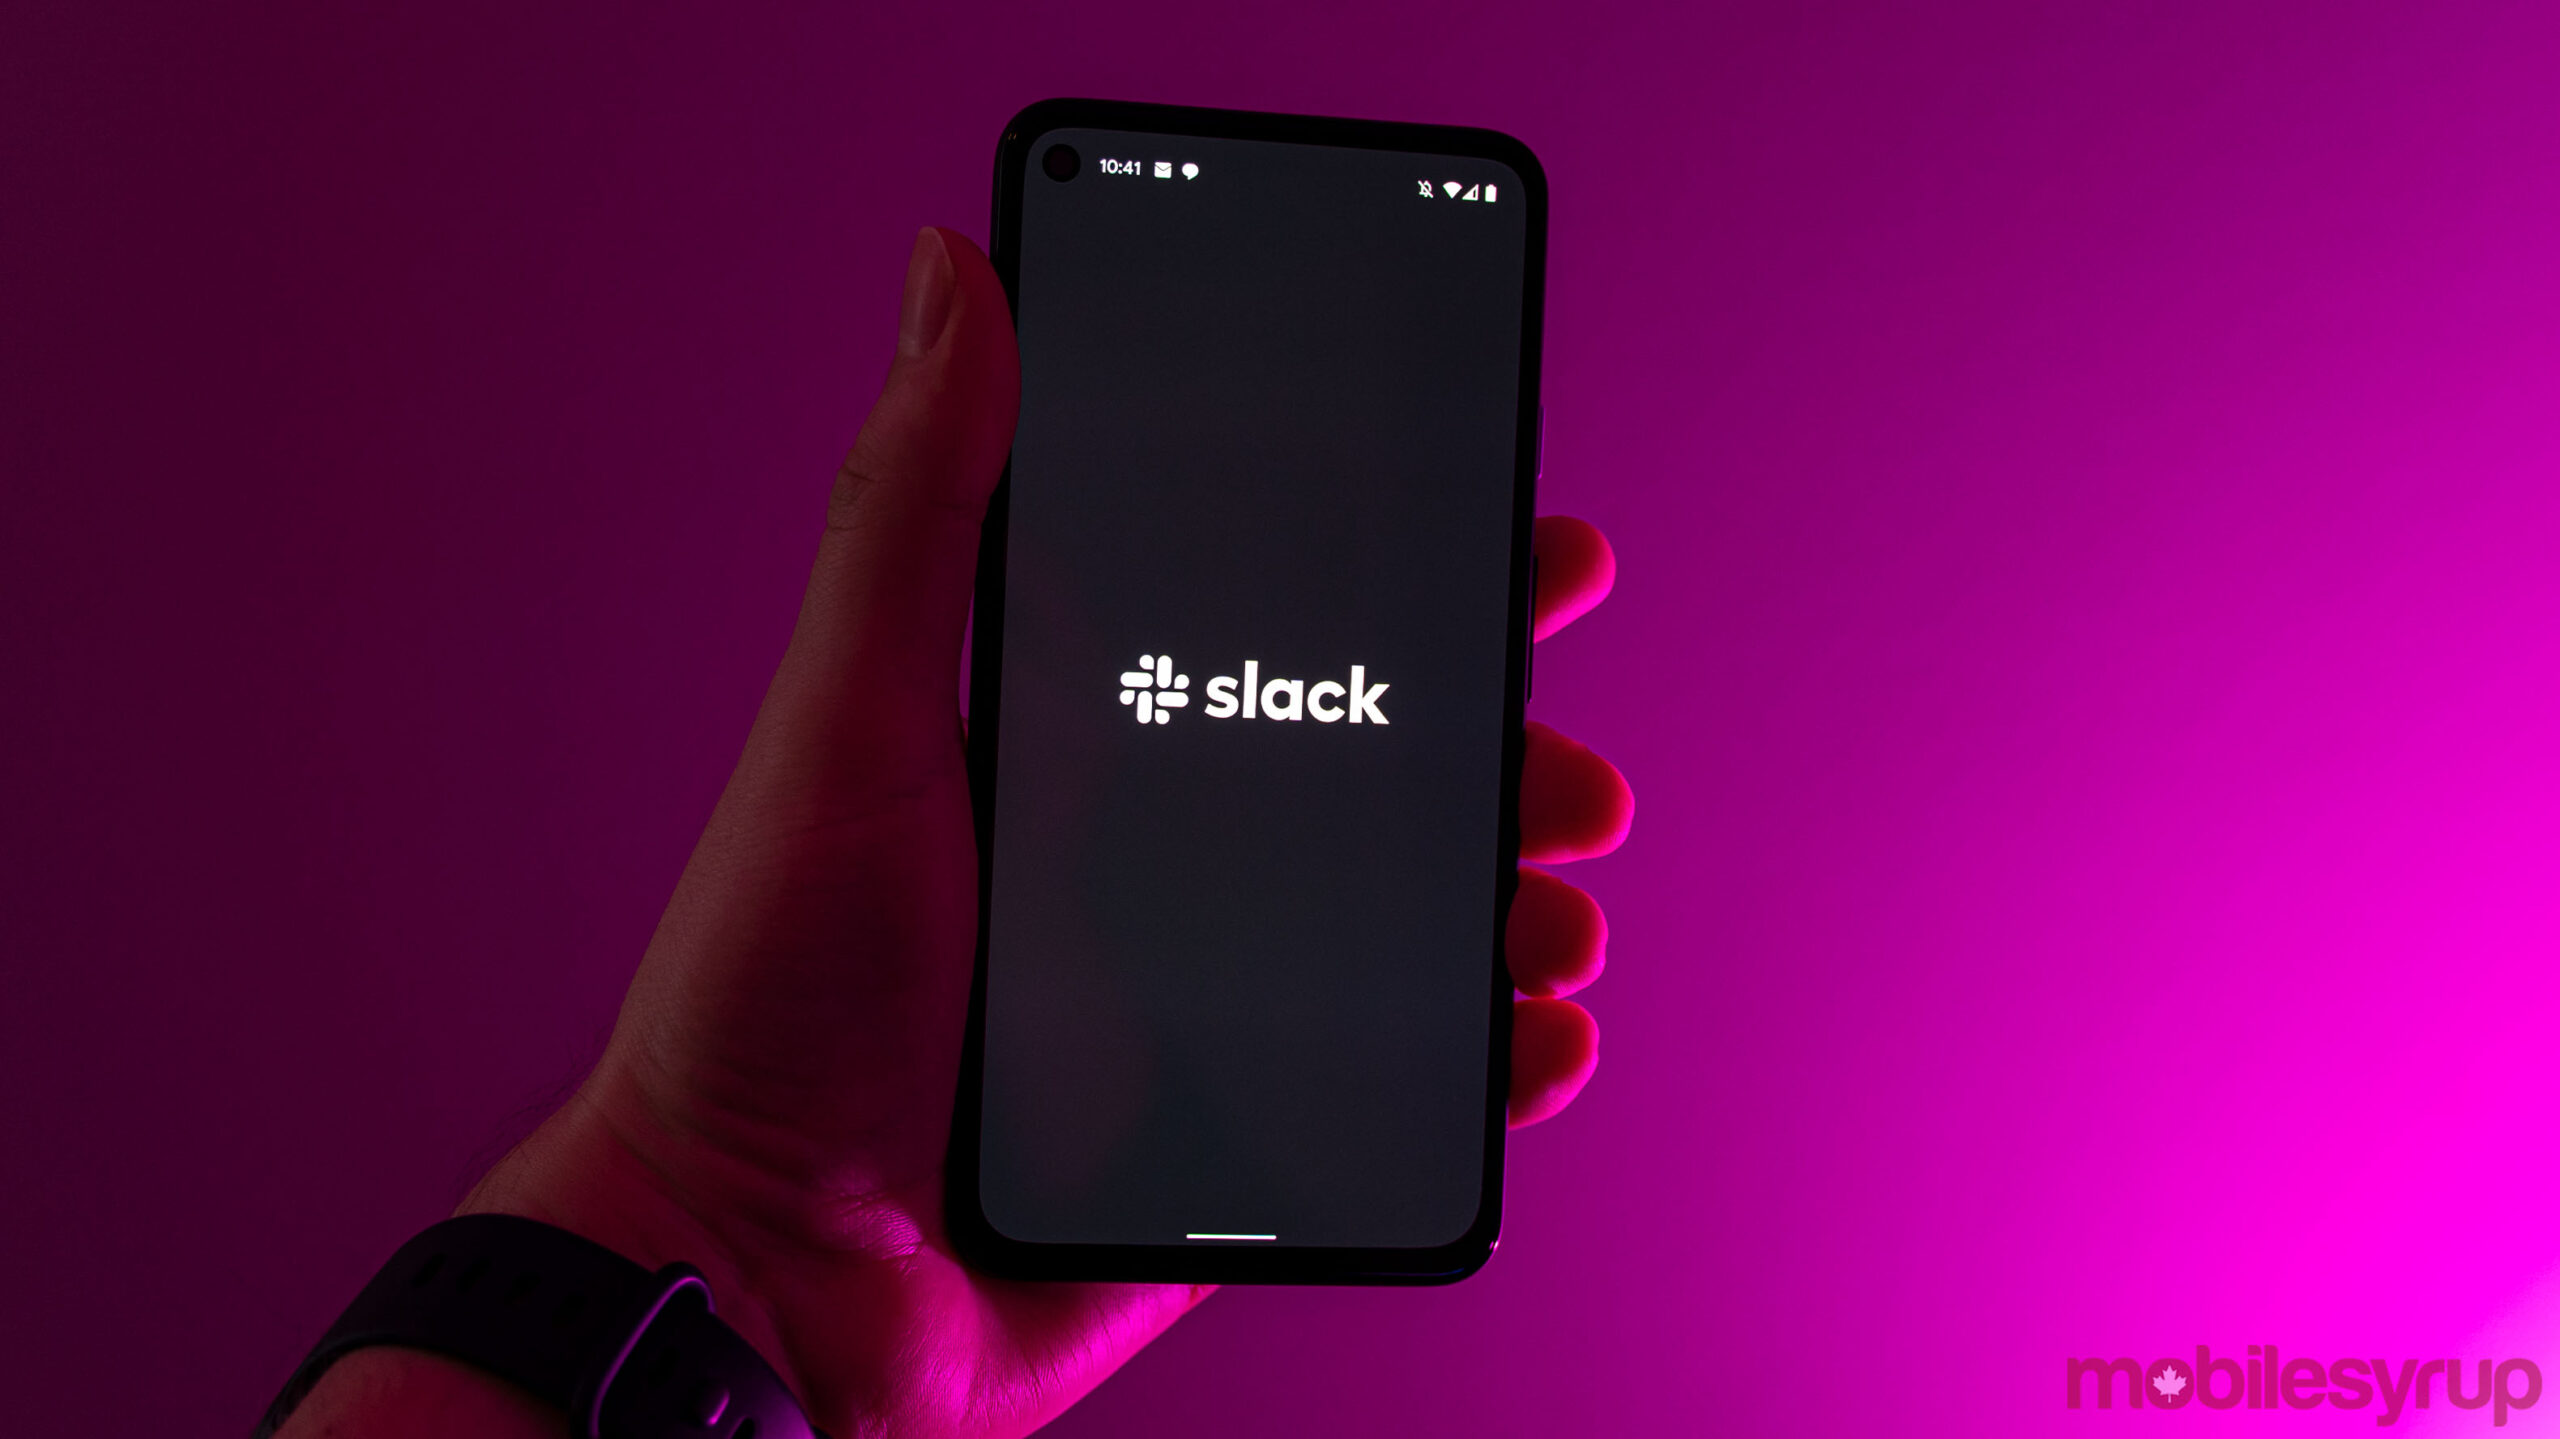 Slack logo on Android